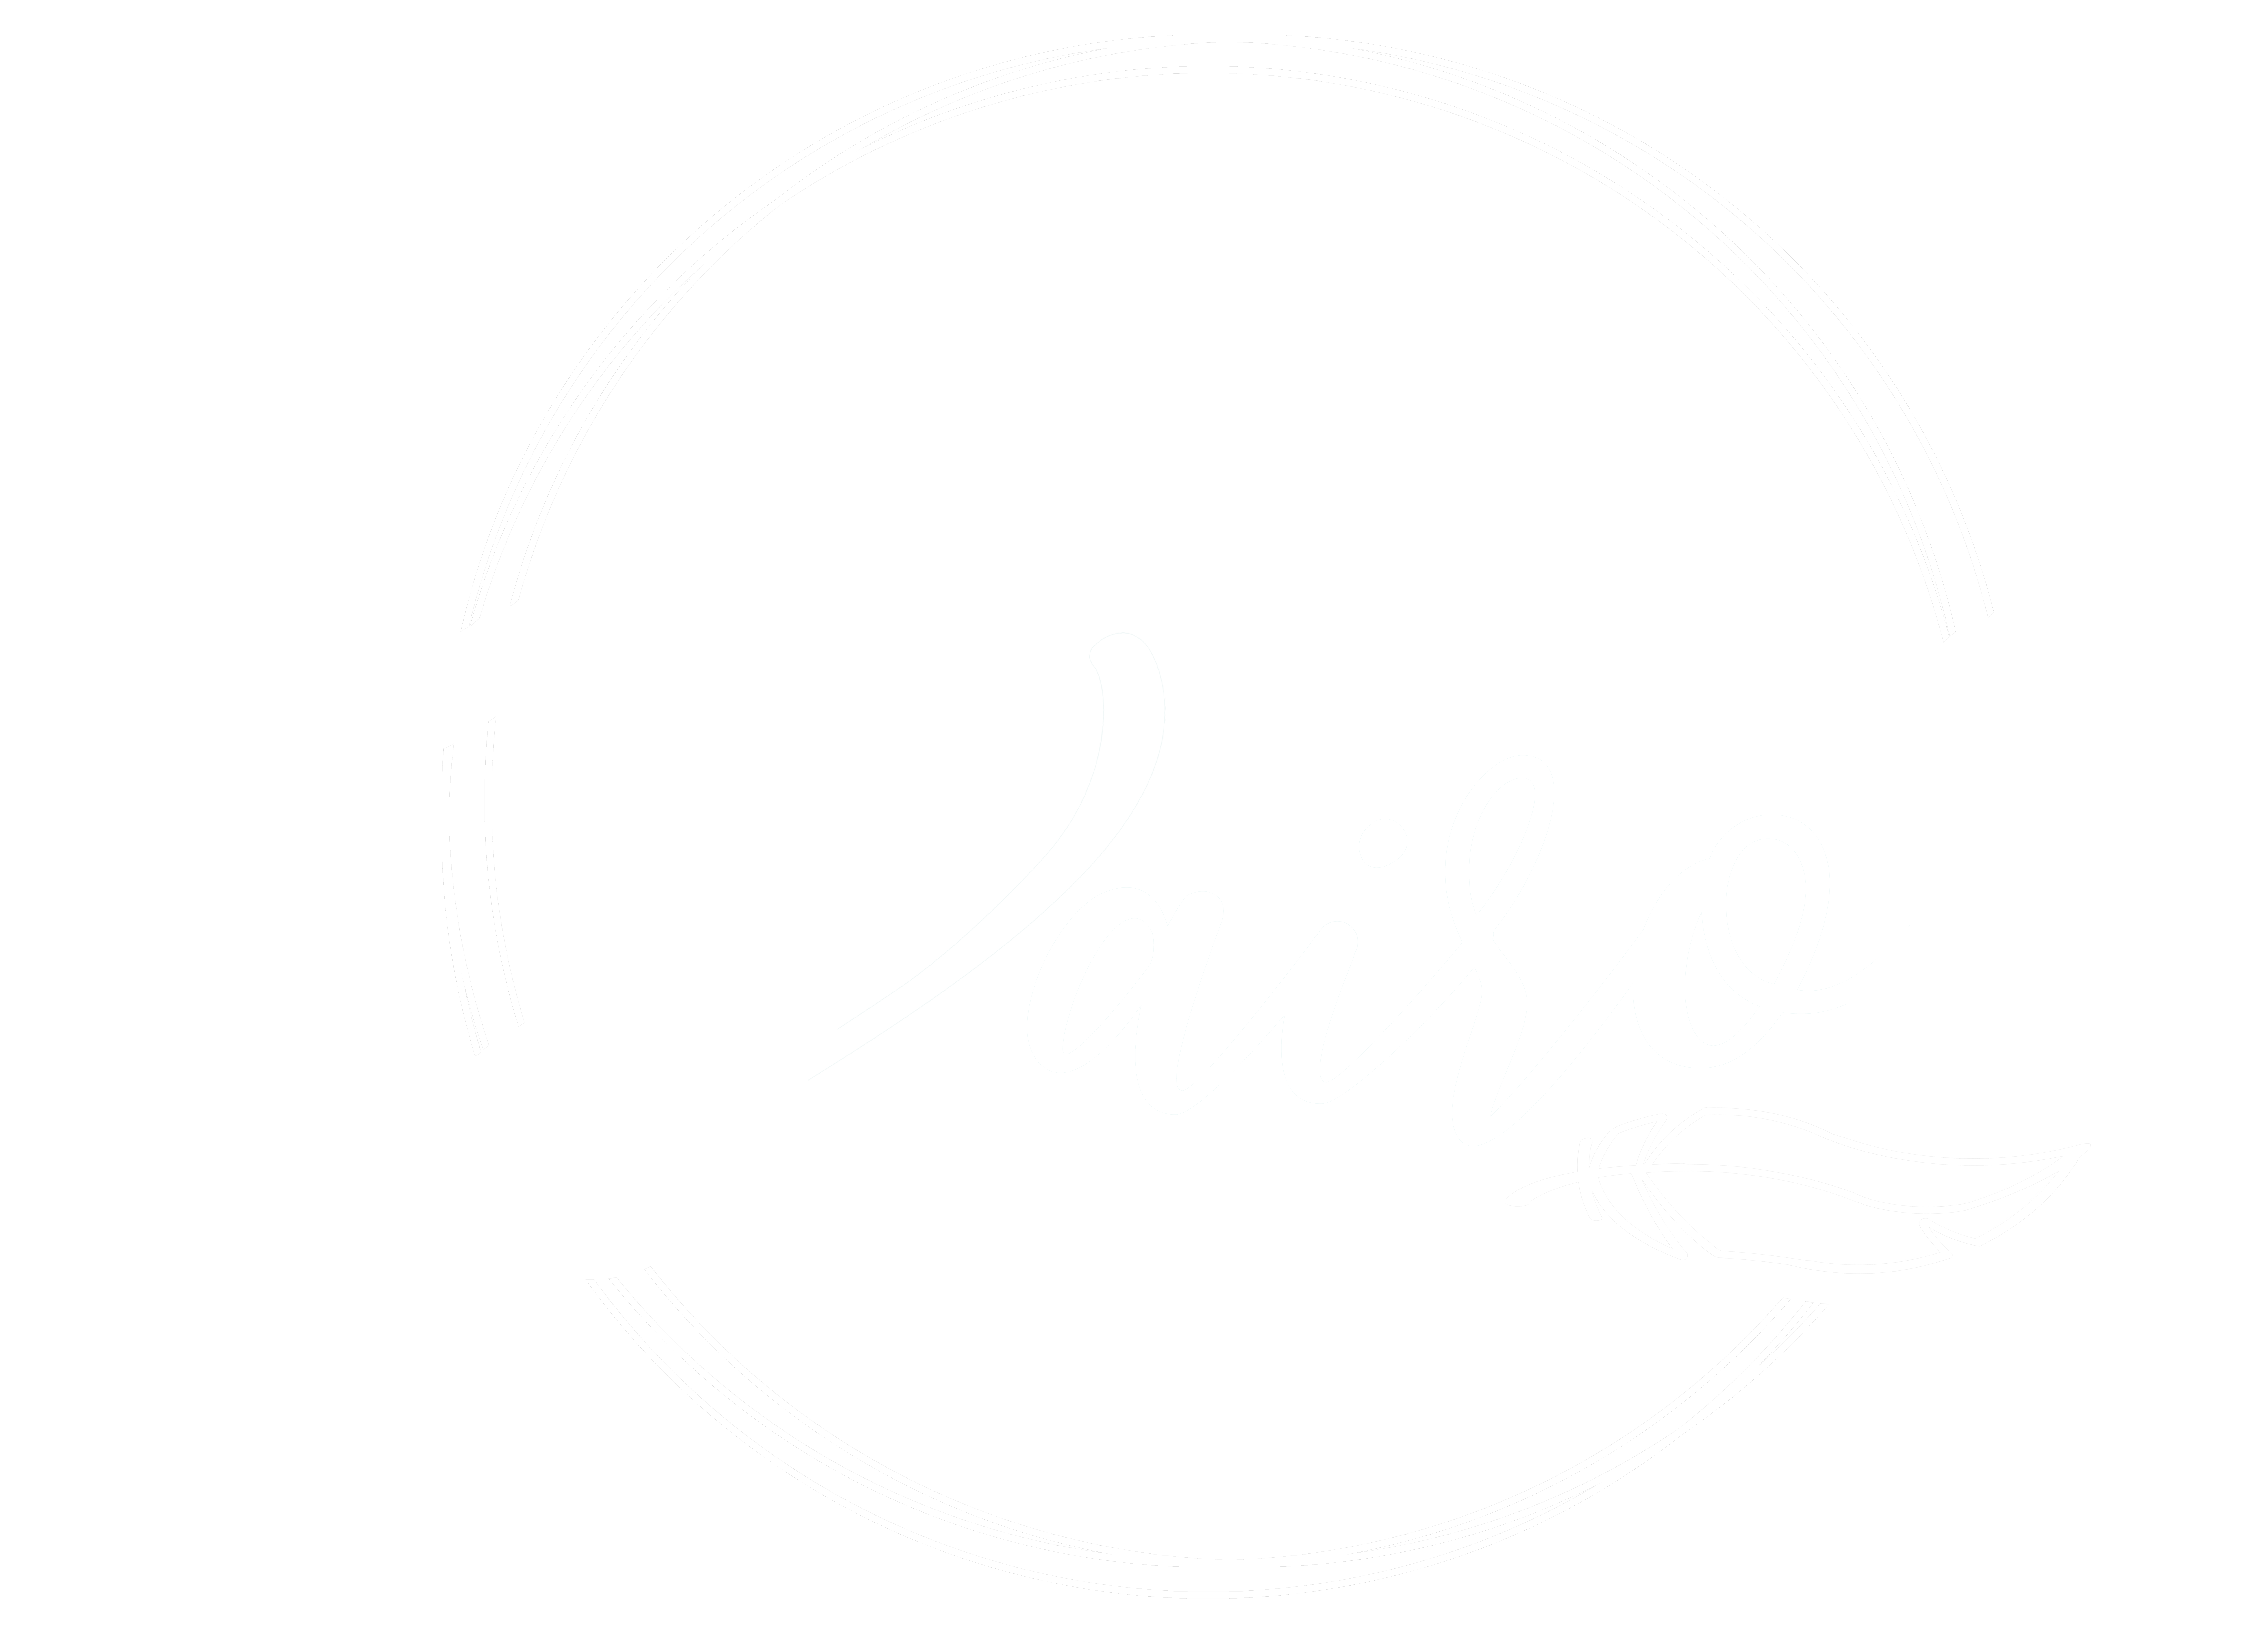 Kairos Photography